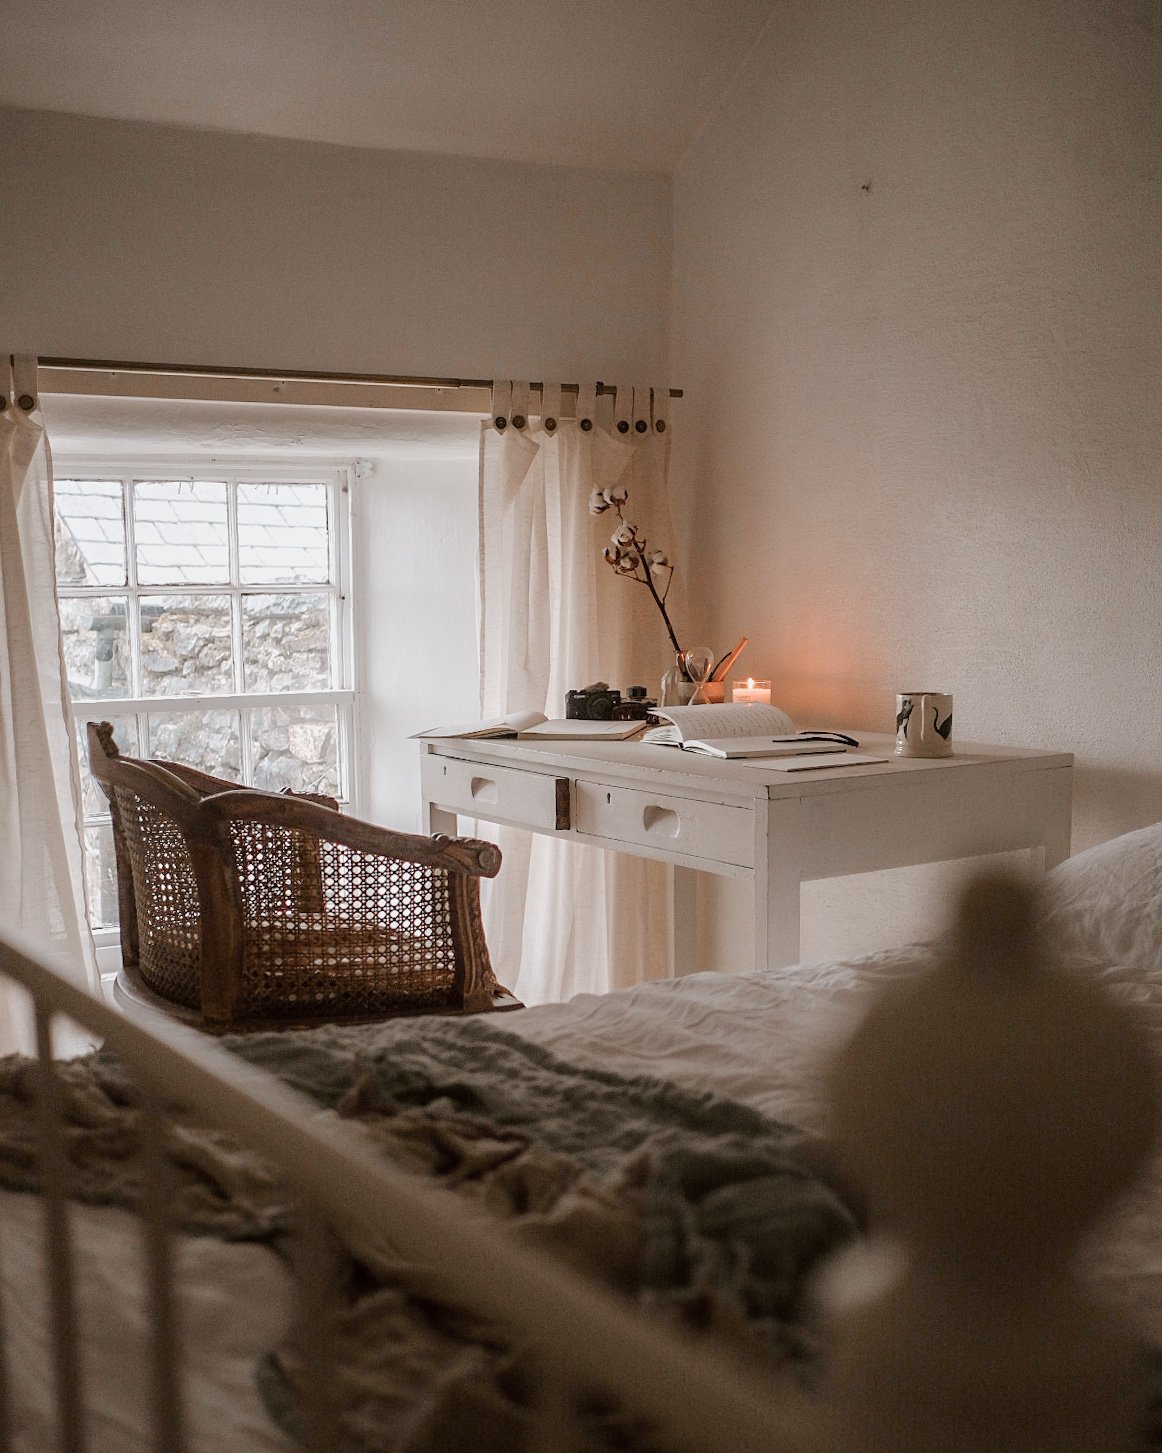 Calm bedroom with small desk area in corner